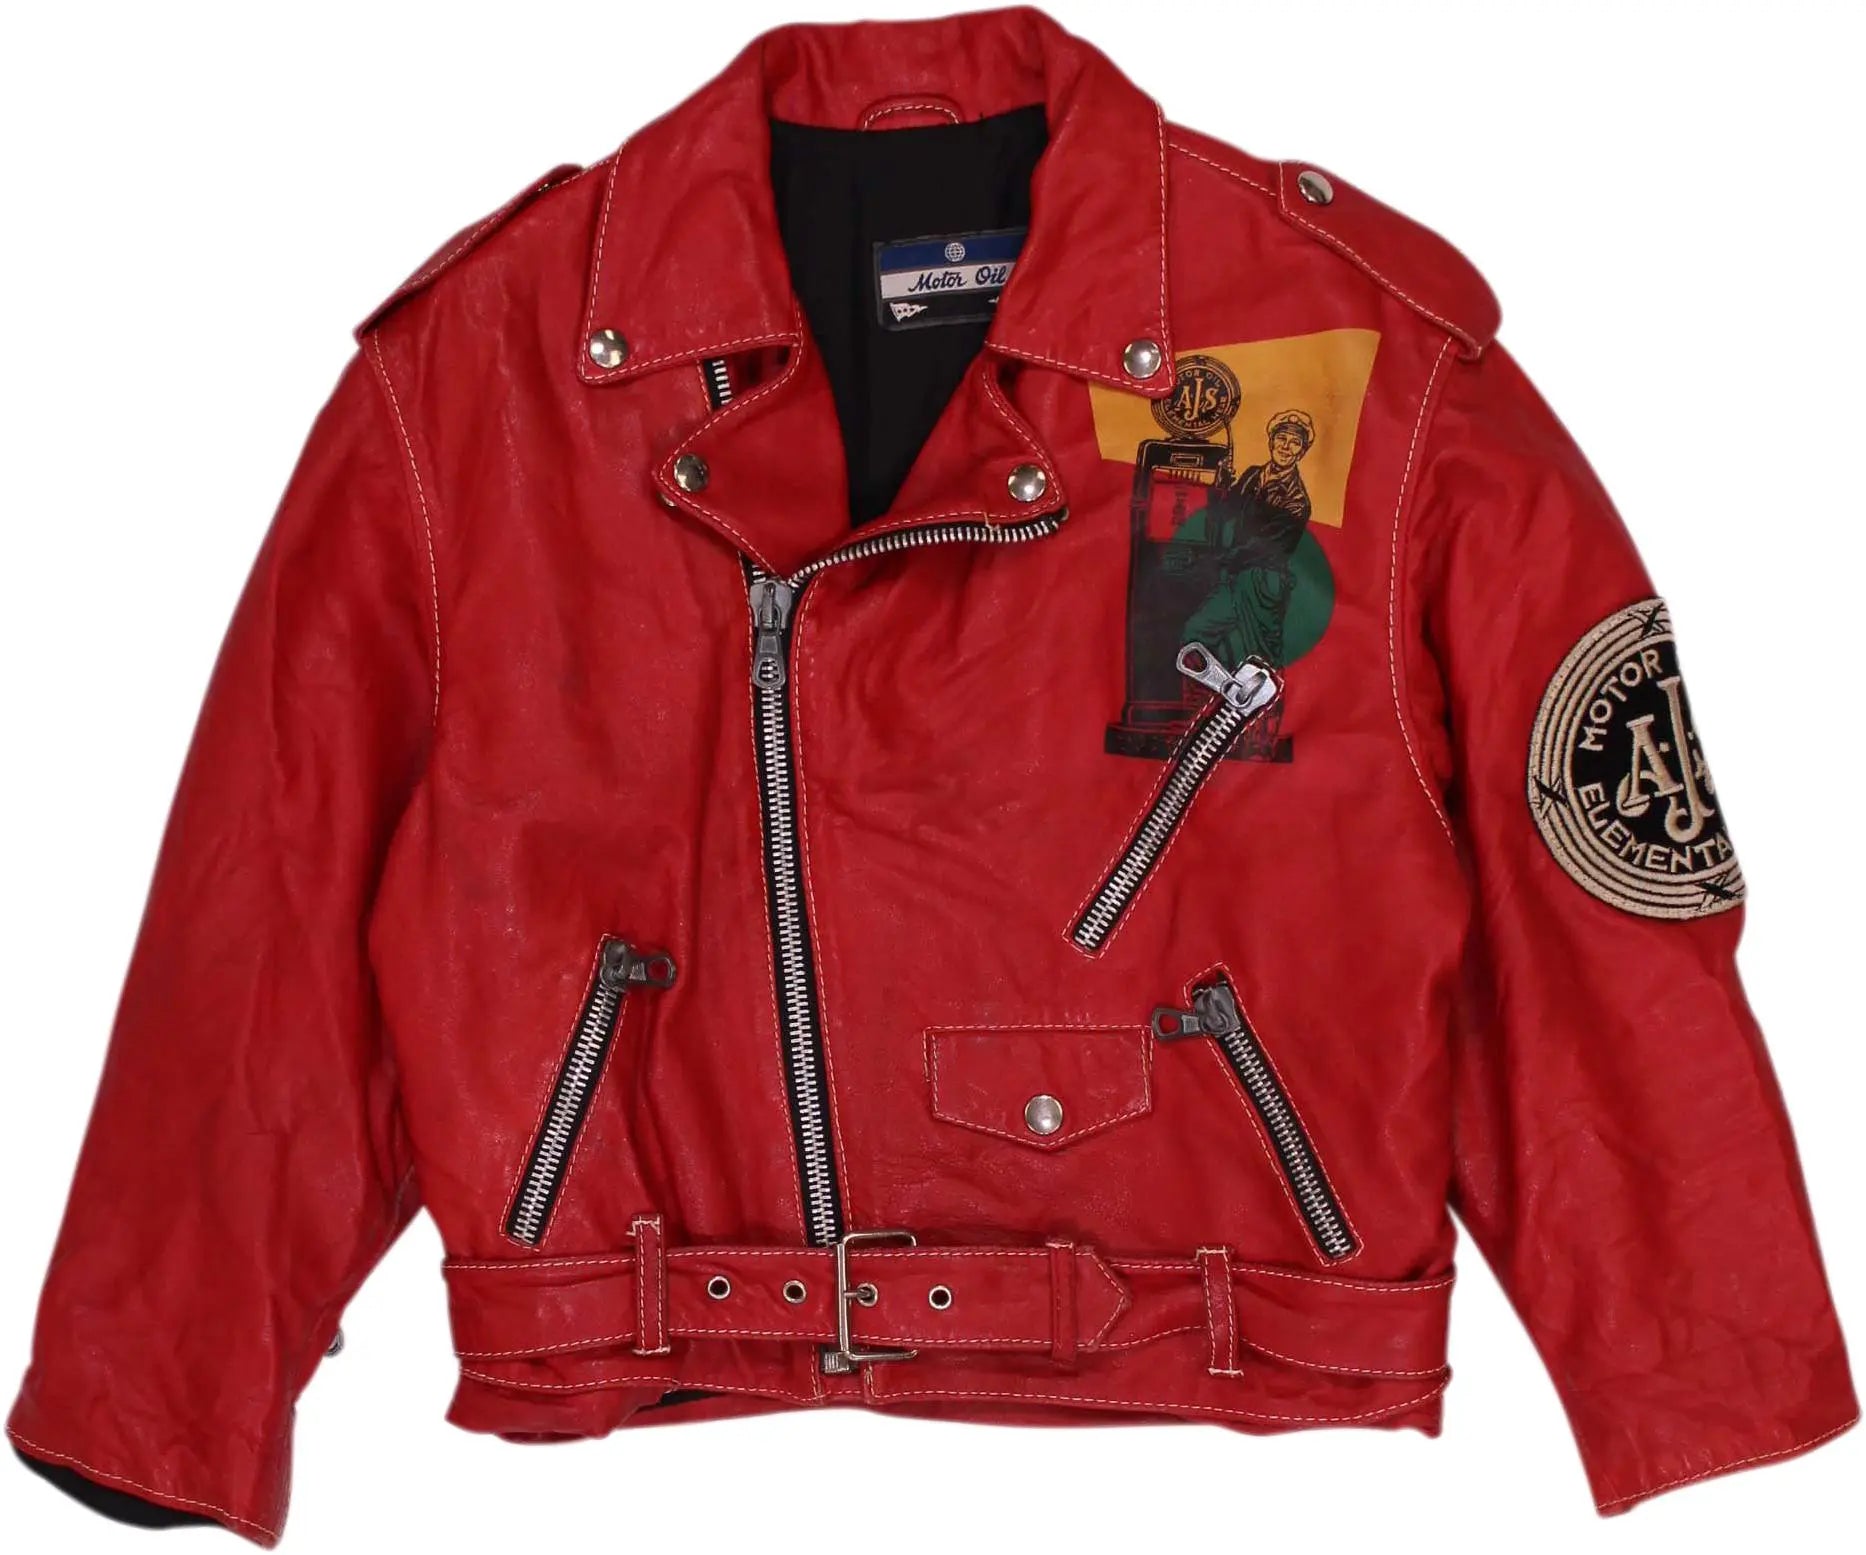 Motor Oil - Red Vintage Leather Jacket- ThriftTale.com - Vintage and second handclothing